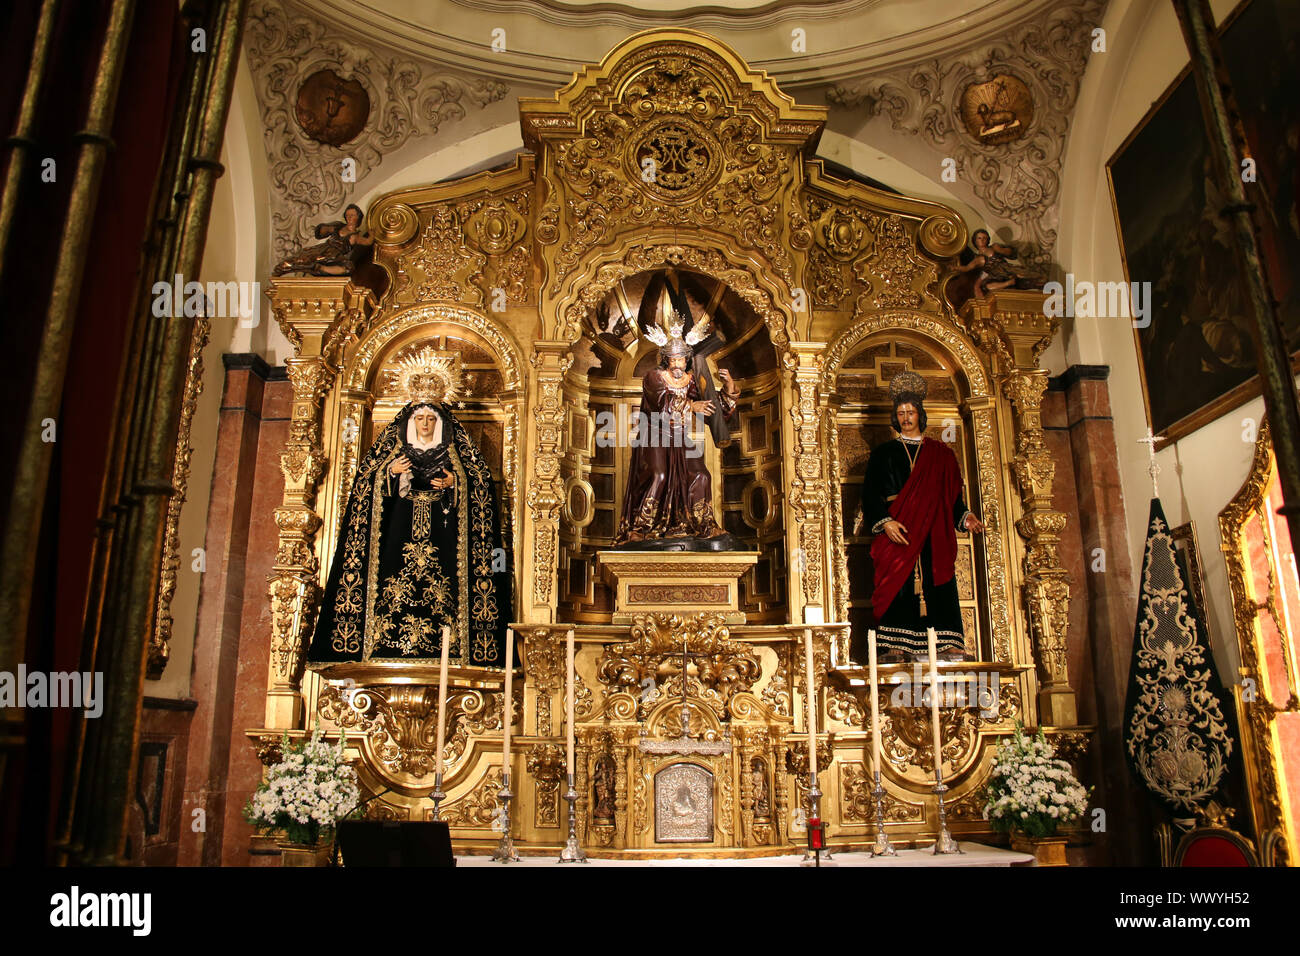 Parish Church of St. Nicholas of Bari - Altar in Sacrament Chapel Stock Photo